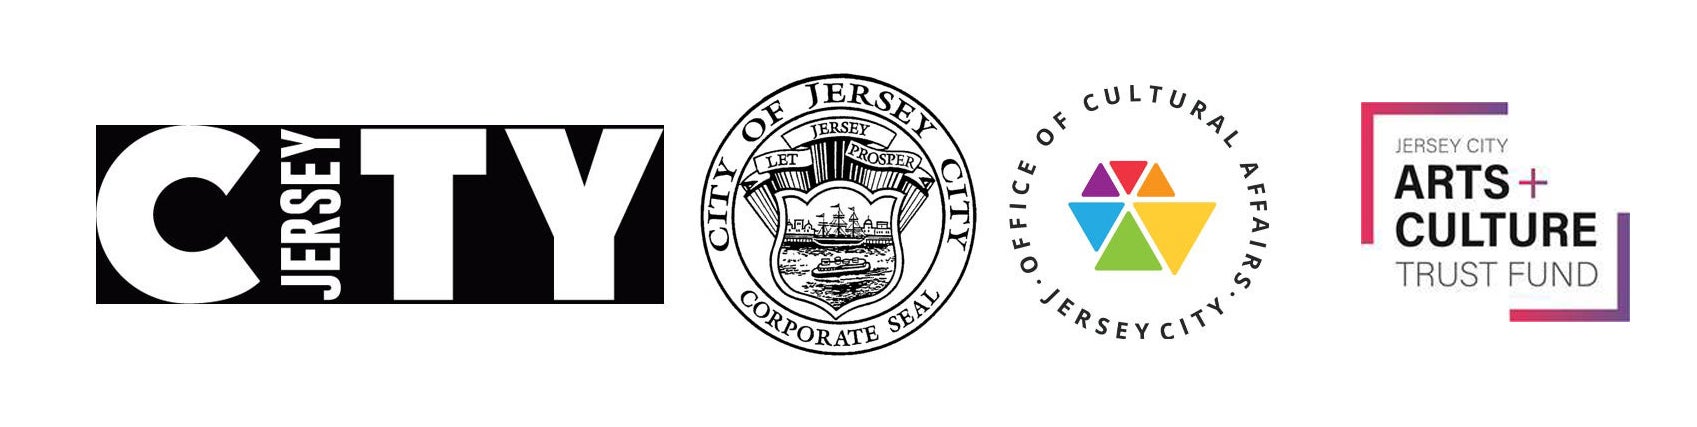 Jersey-City-Logos-updated-c8cf958ad4.jpg